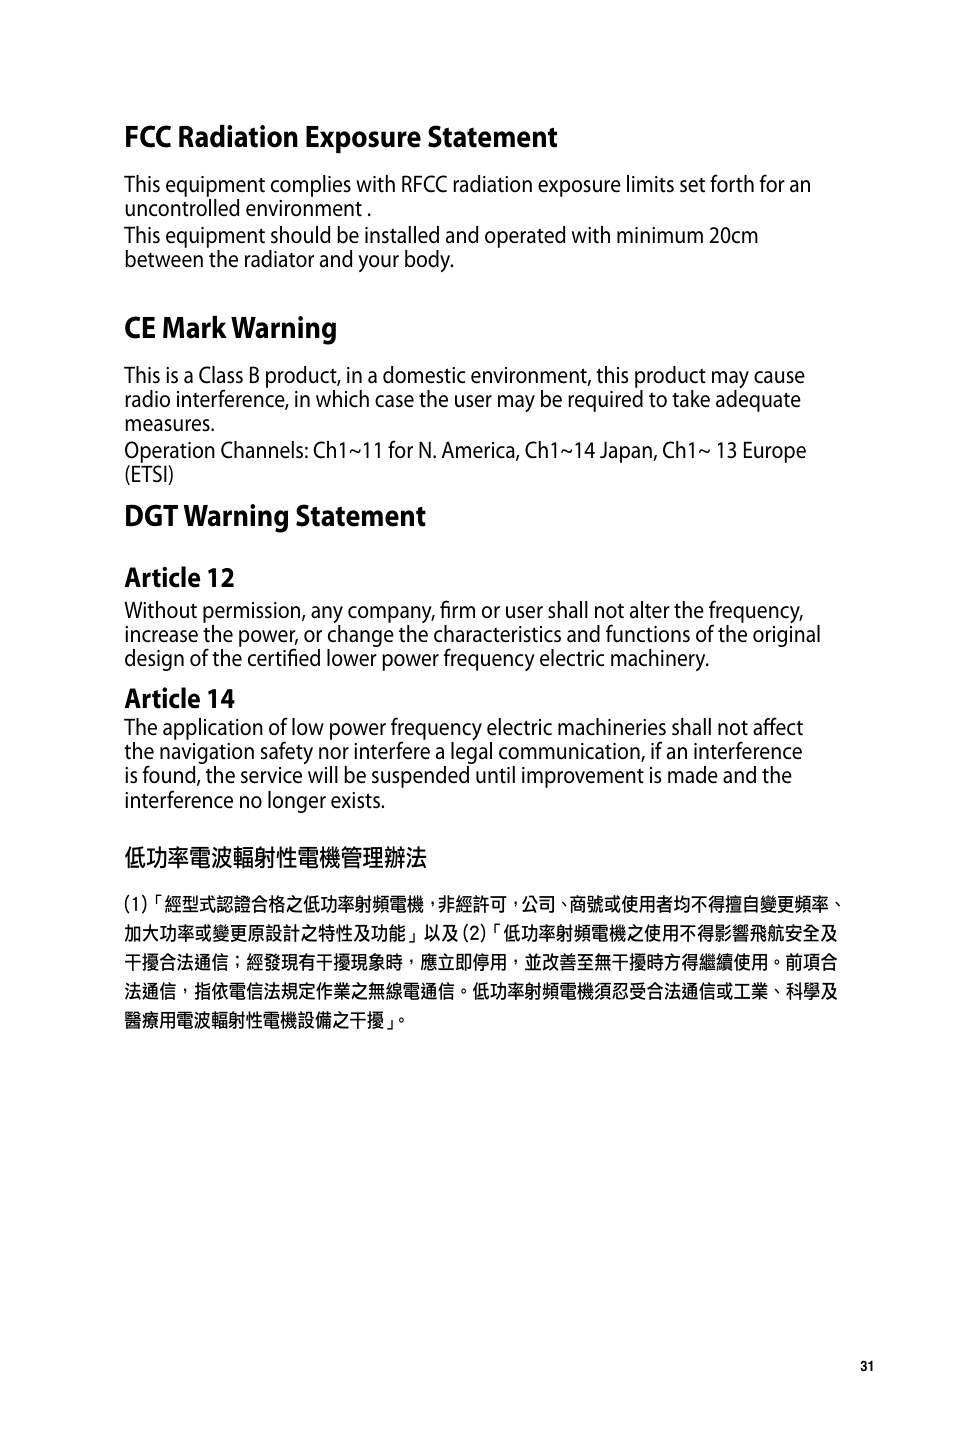 Fcc radiation exposure statement, Ce mark warning, Dgt warning statement | Asus  USB-AC51 User Manual | Page 31 / 36 | Original mode